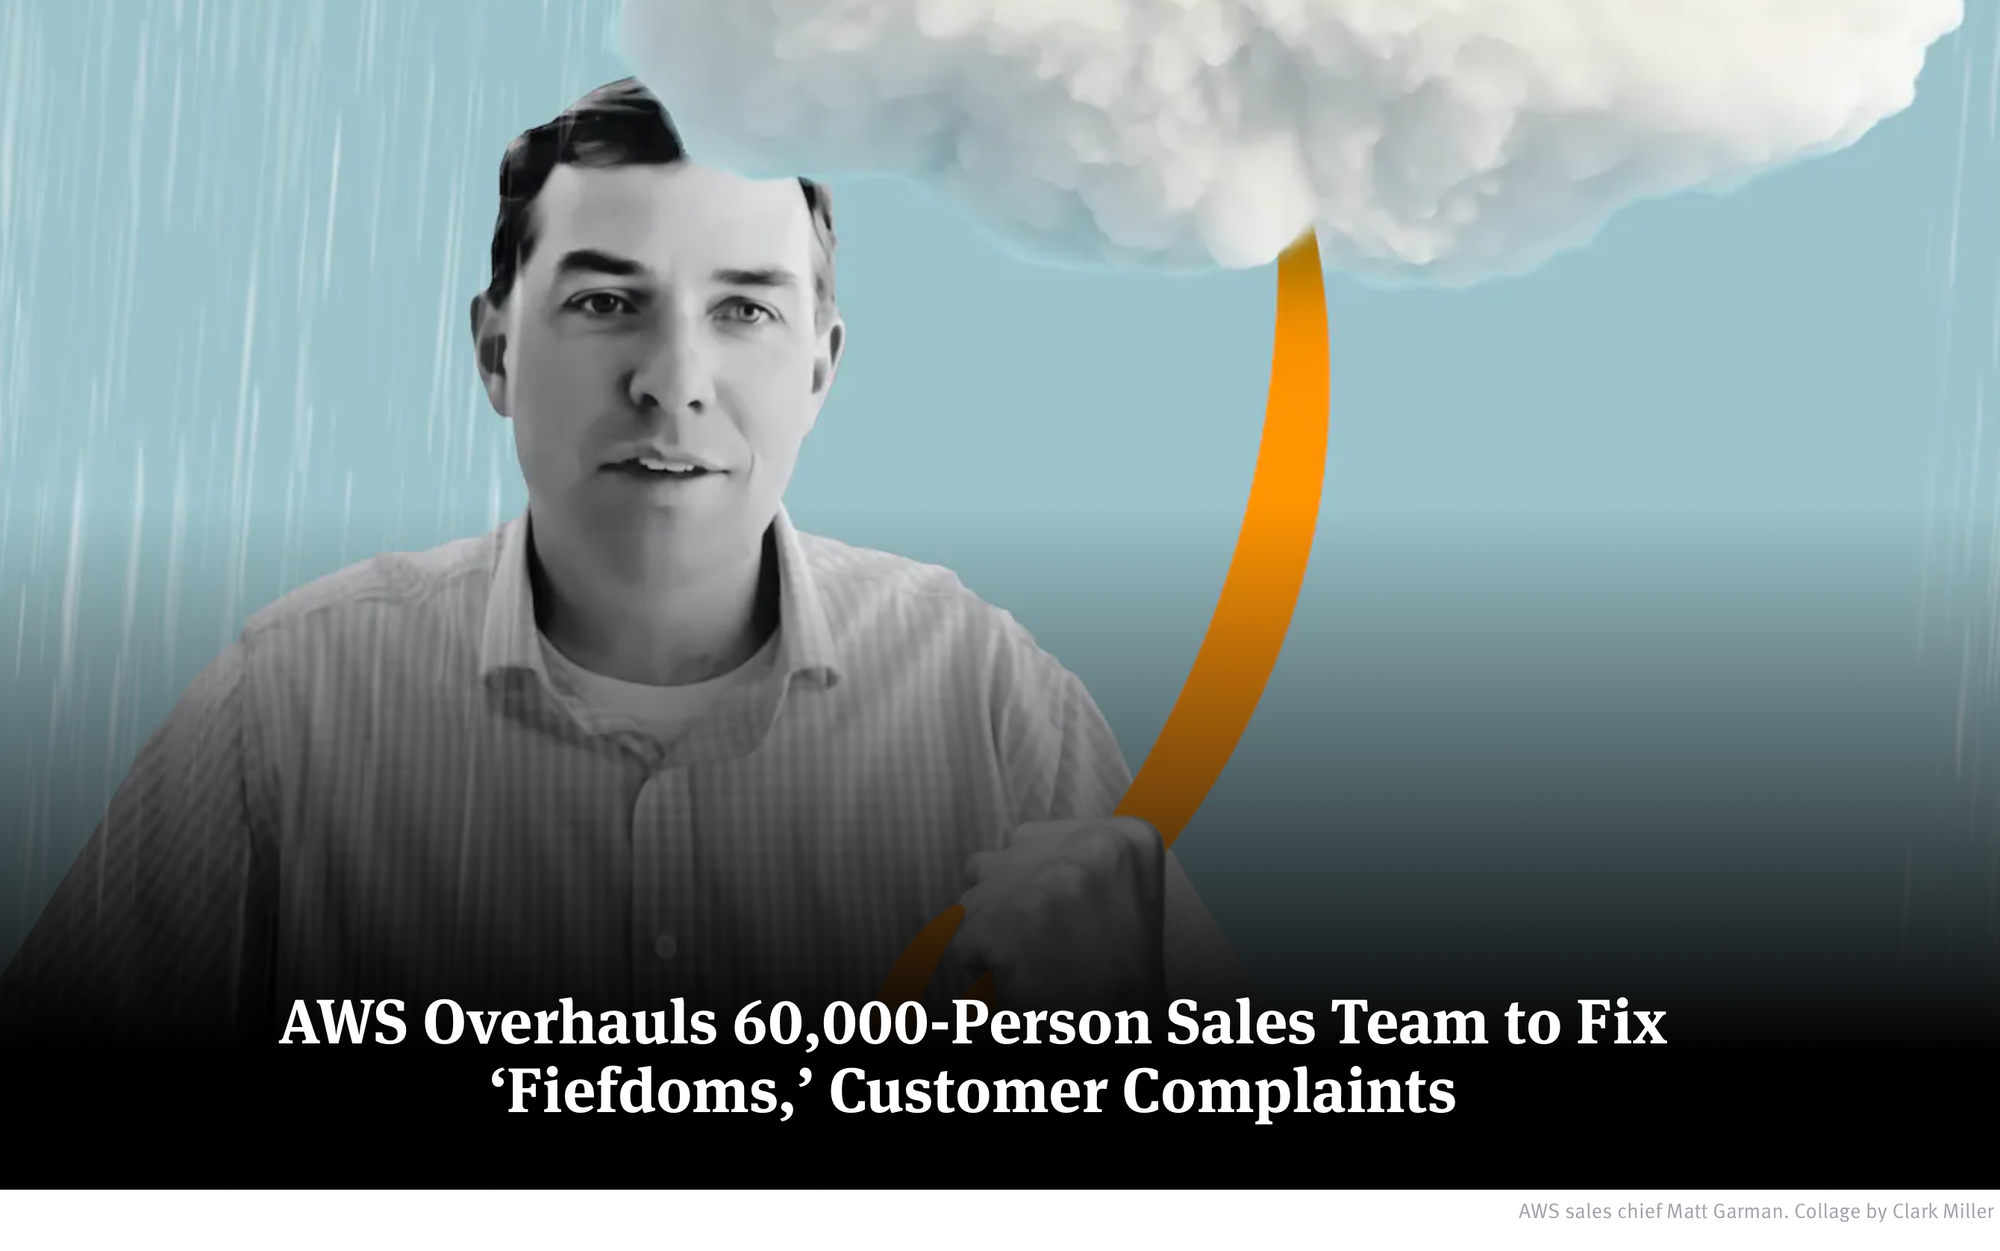 AWS改革6万人的销售团队以解决客户投诉问题